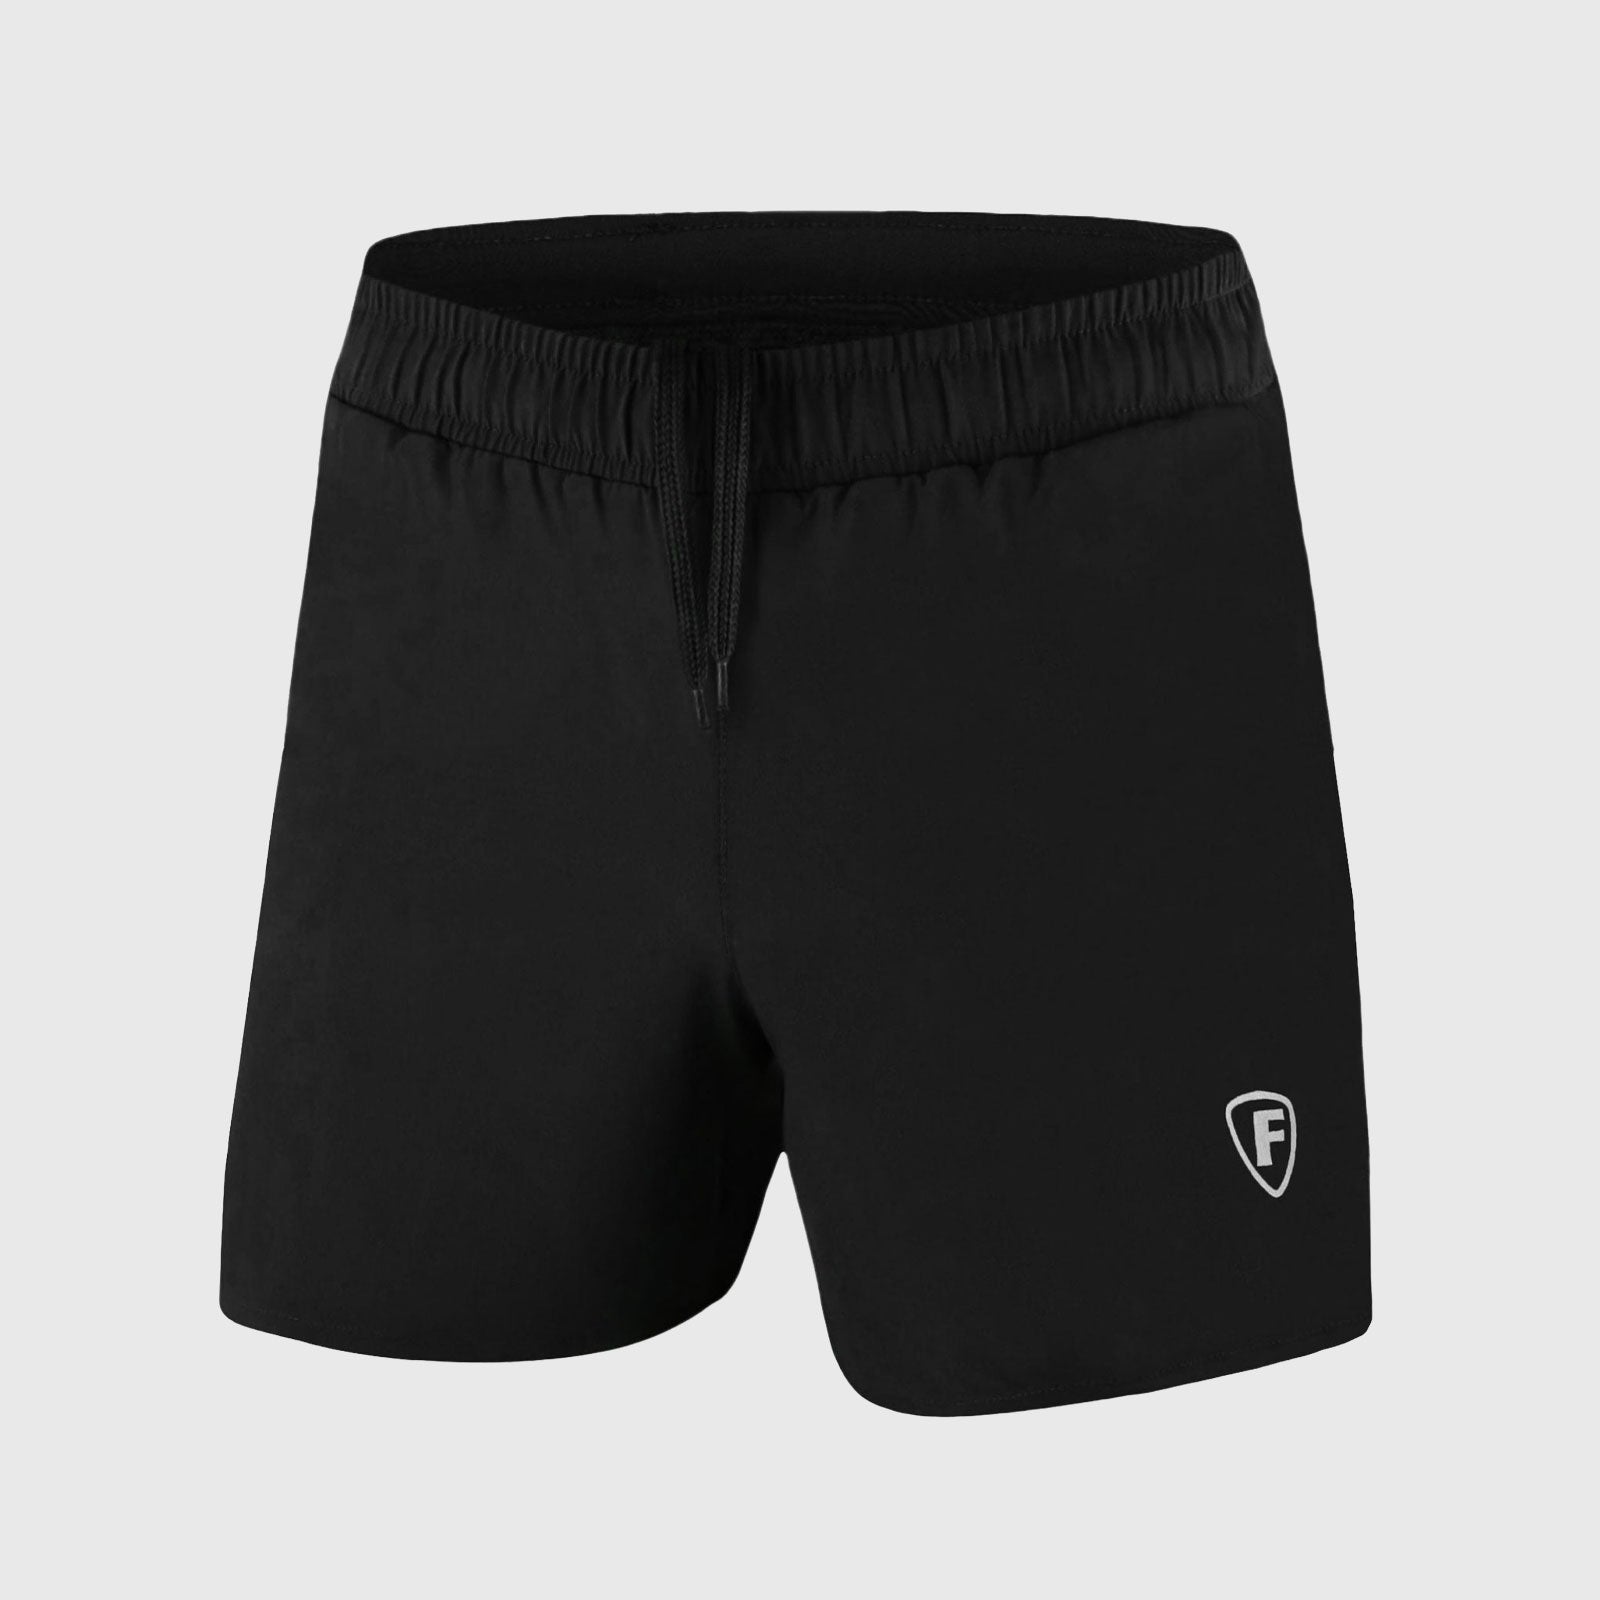 FDX Men's Black Breathable Running Shorts Waist Belt Anti Odor Moisture Wicking & Perfect for Trekking, Tennis, squash & Gym Sports & Outdoor